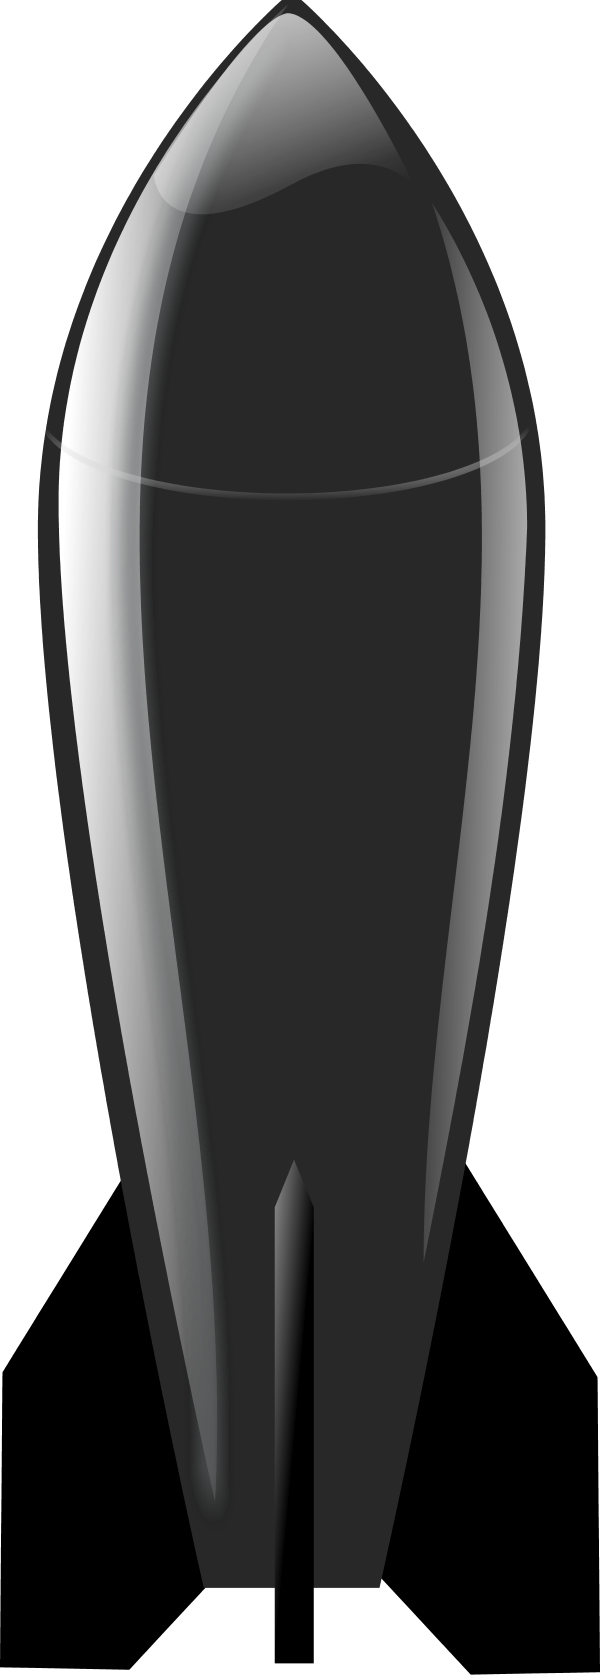 Bomb Vector Clip Art - Missile Clip Art